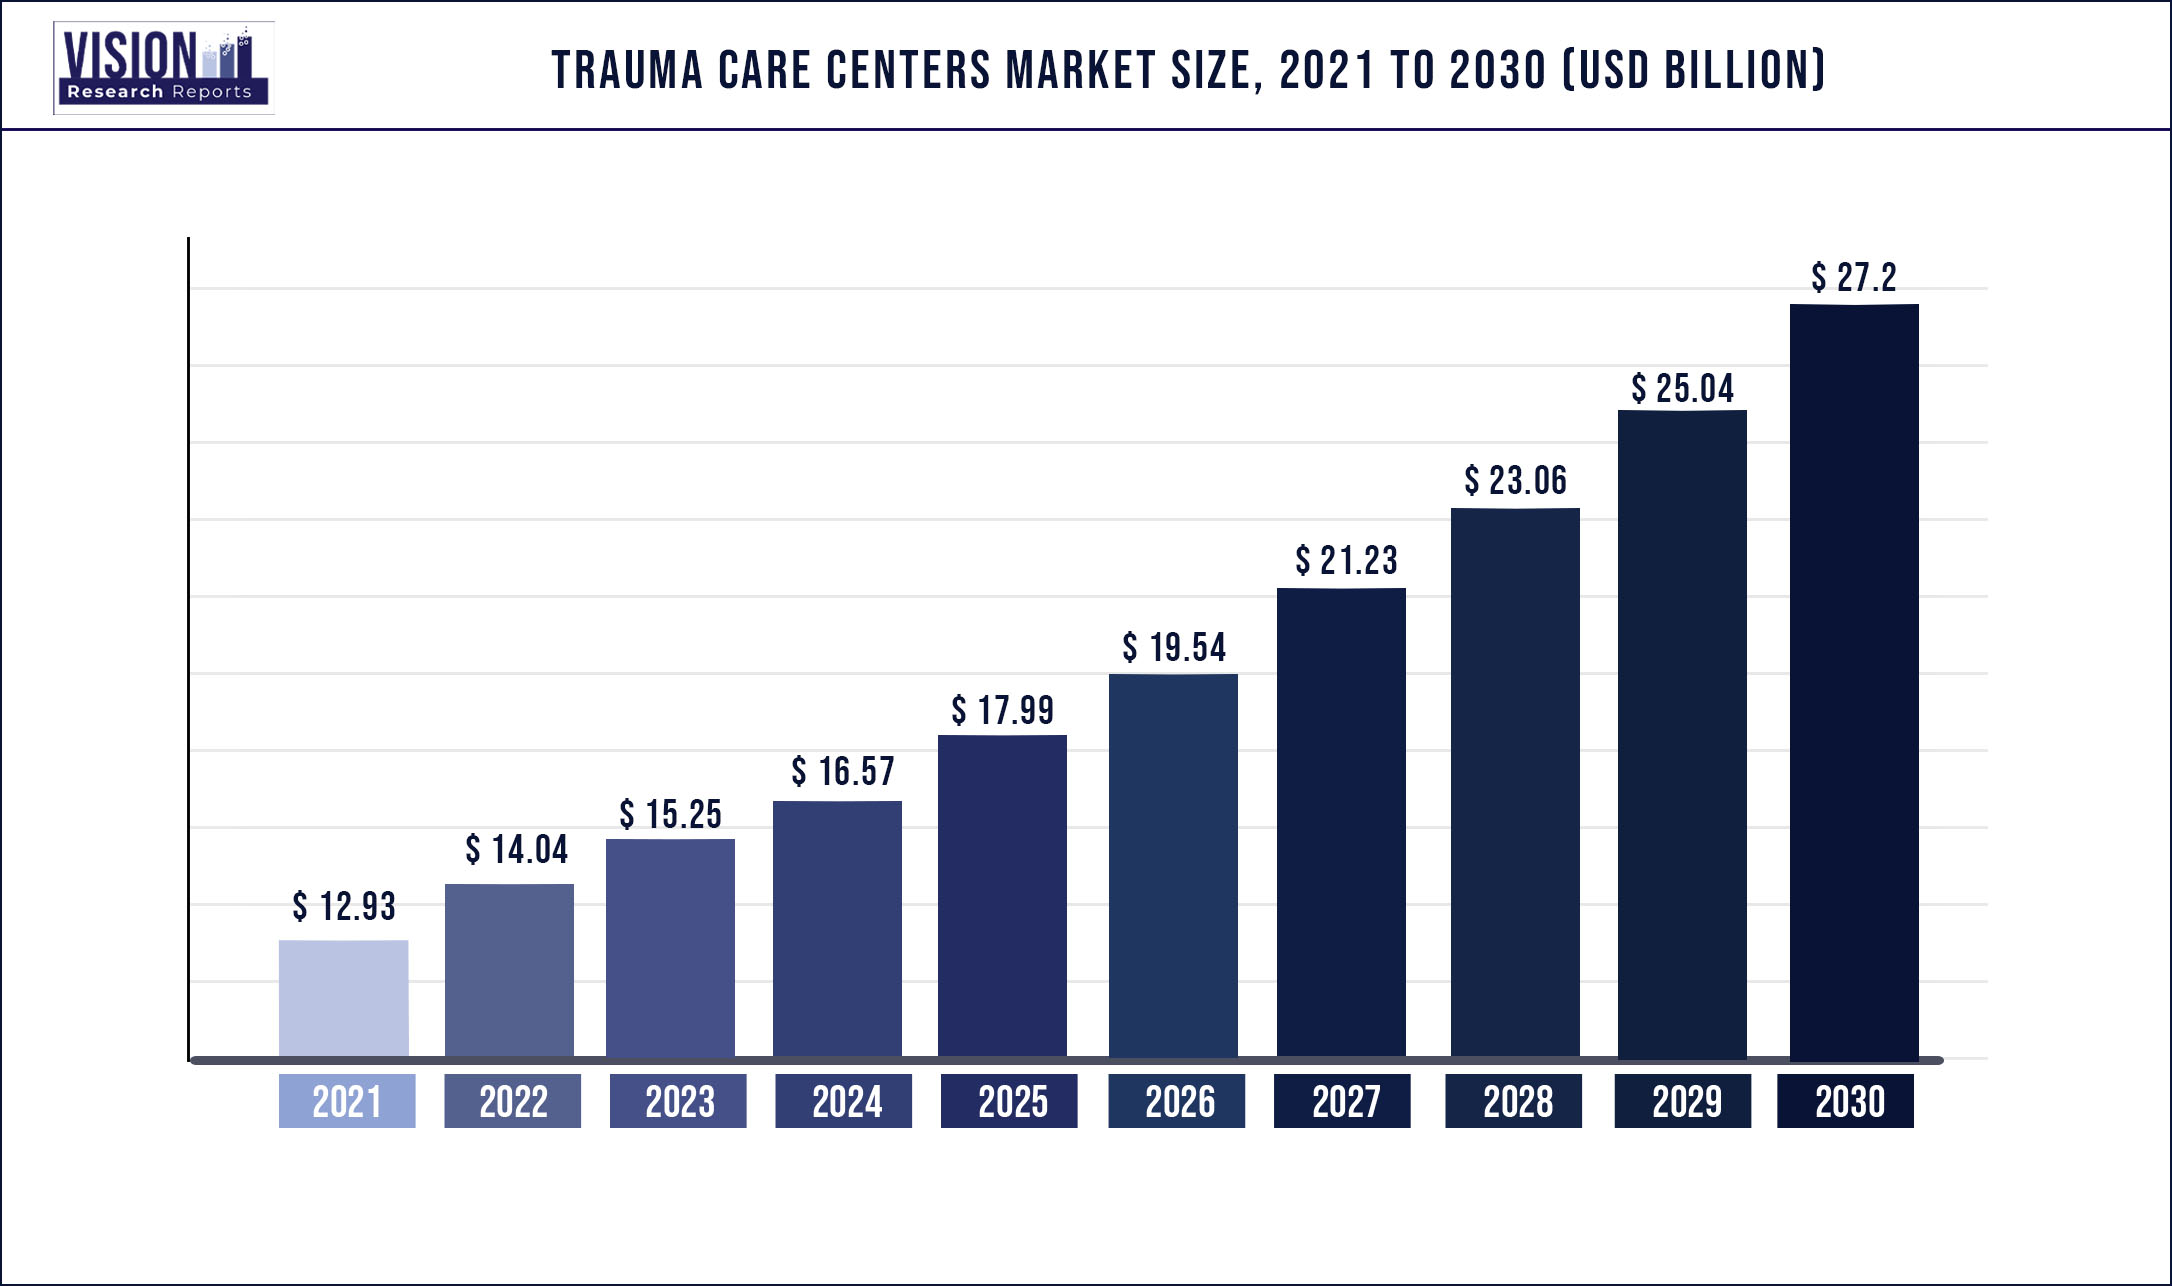 Trauma Care Centers Market Size 2021 to 2030